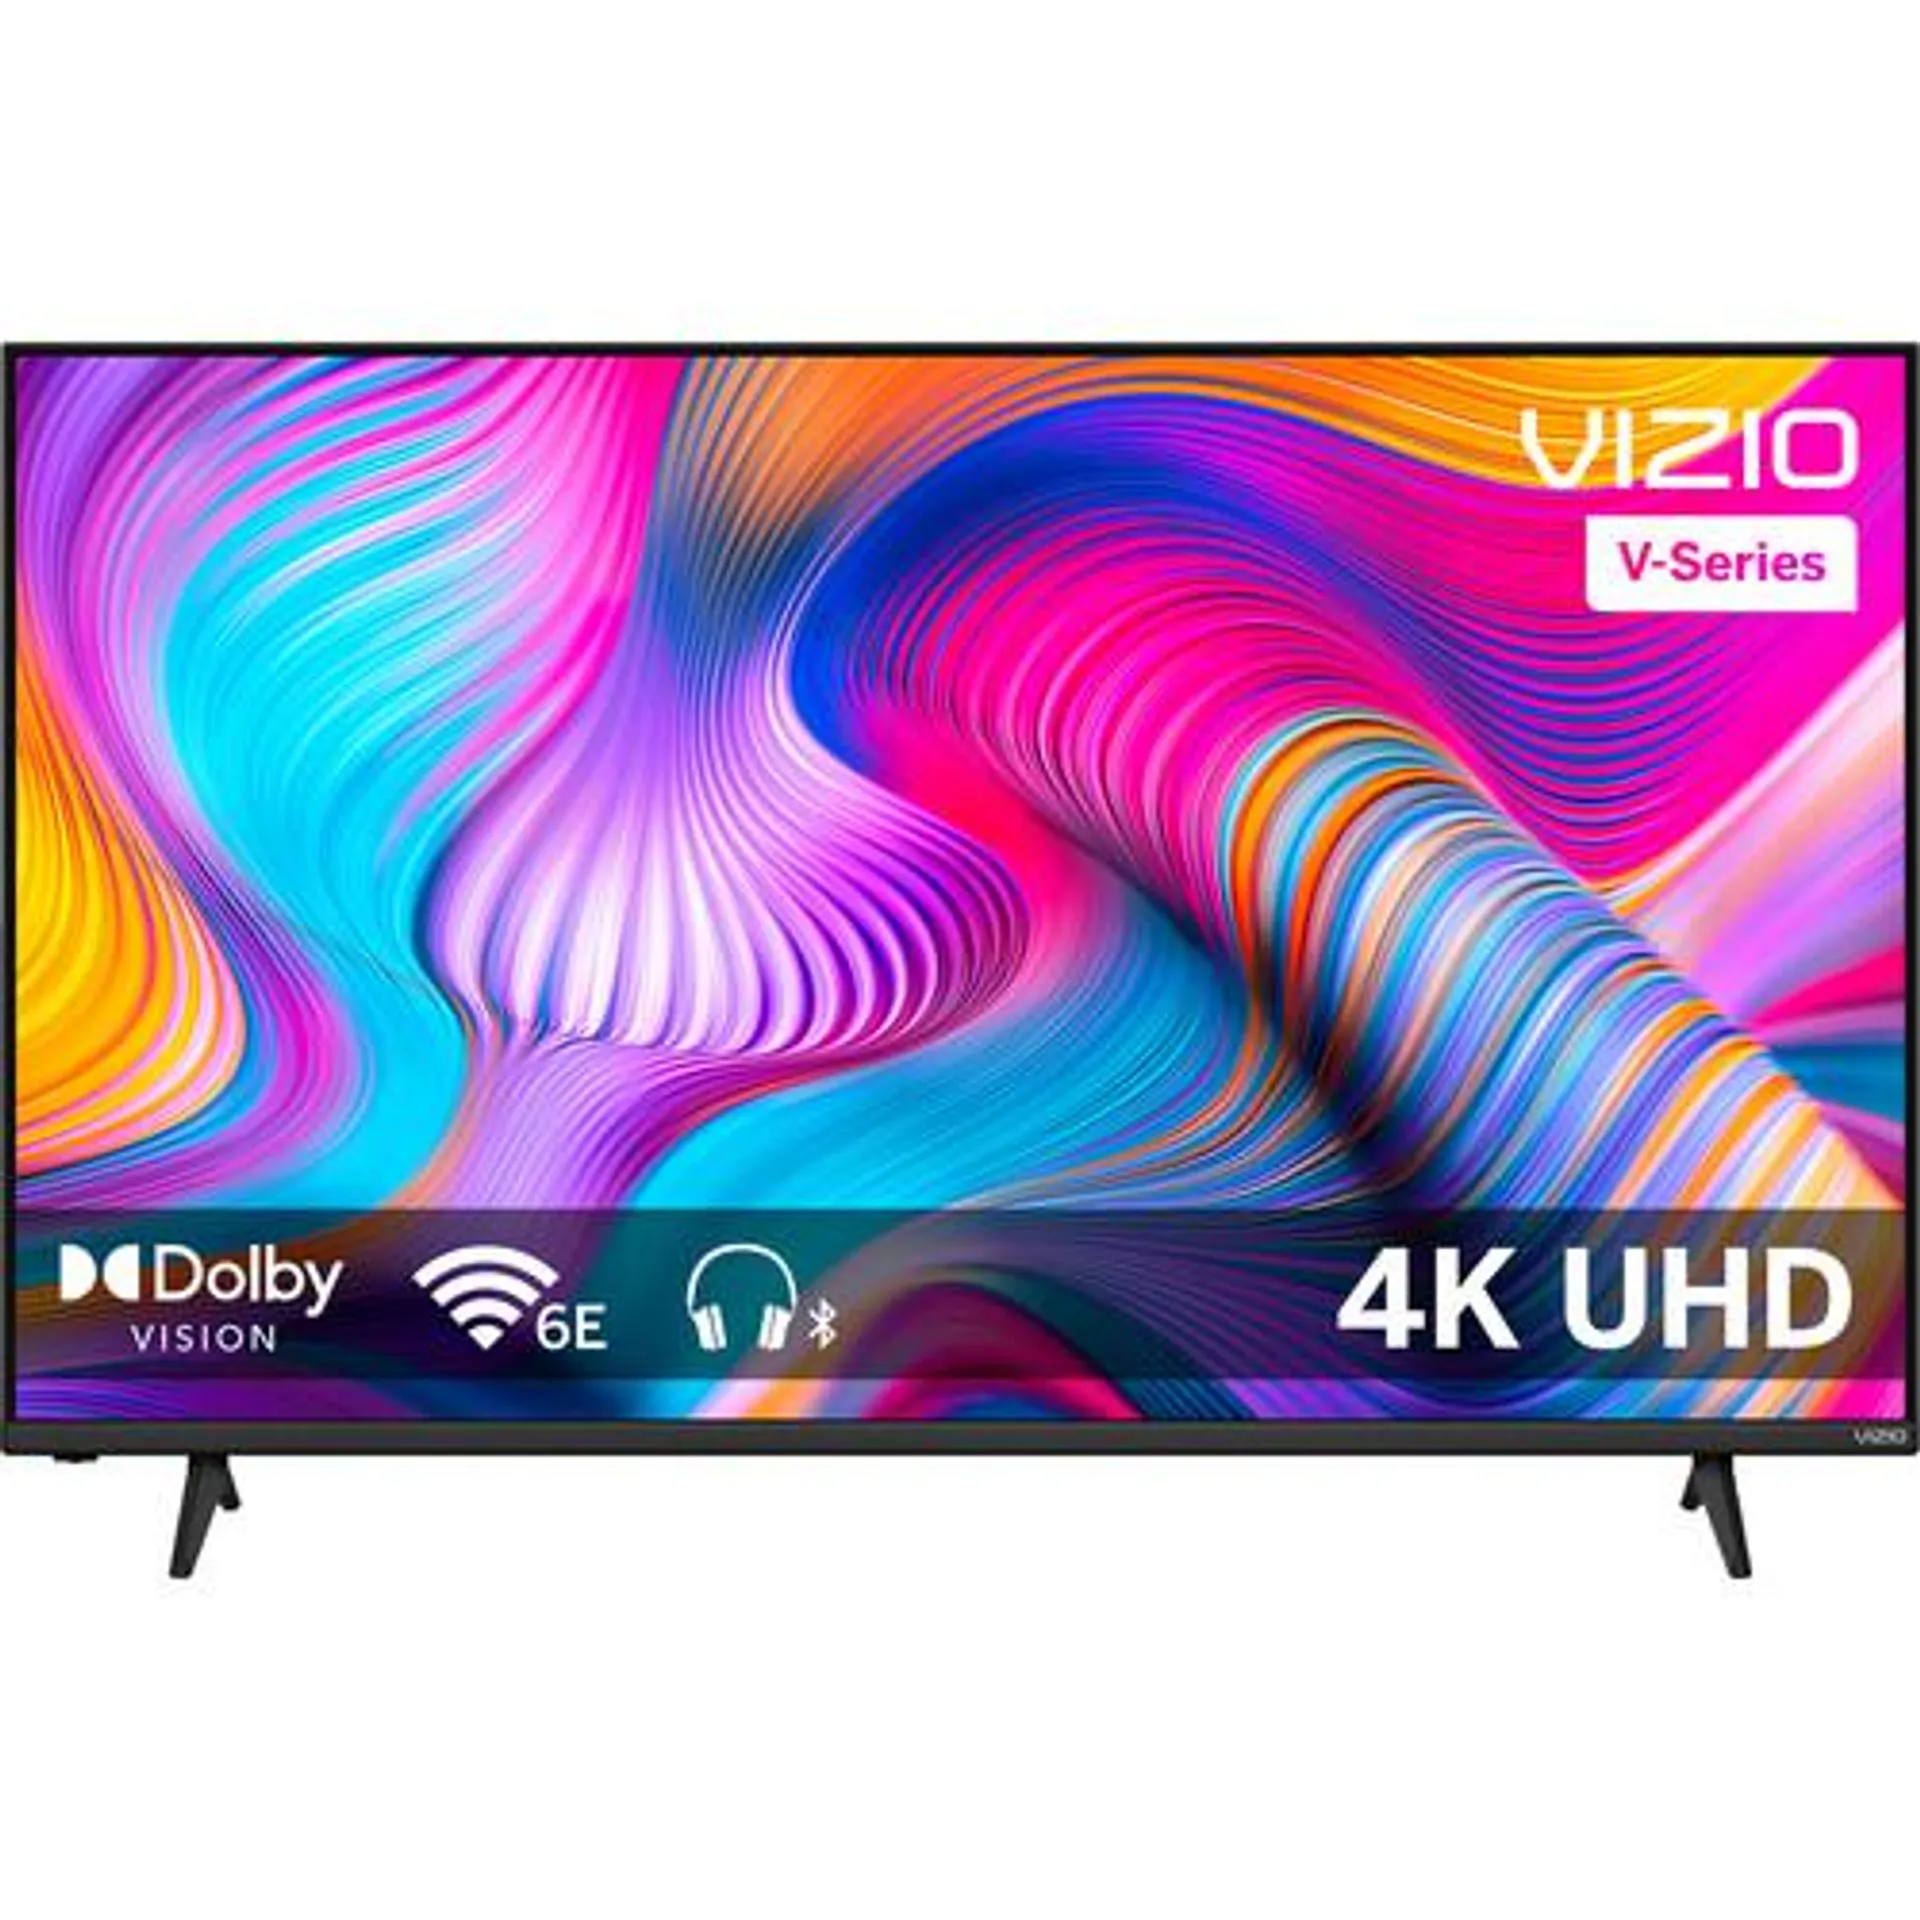 VIZIO V-Series 55" 4K HDR Smart LED TV